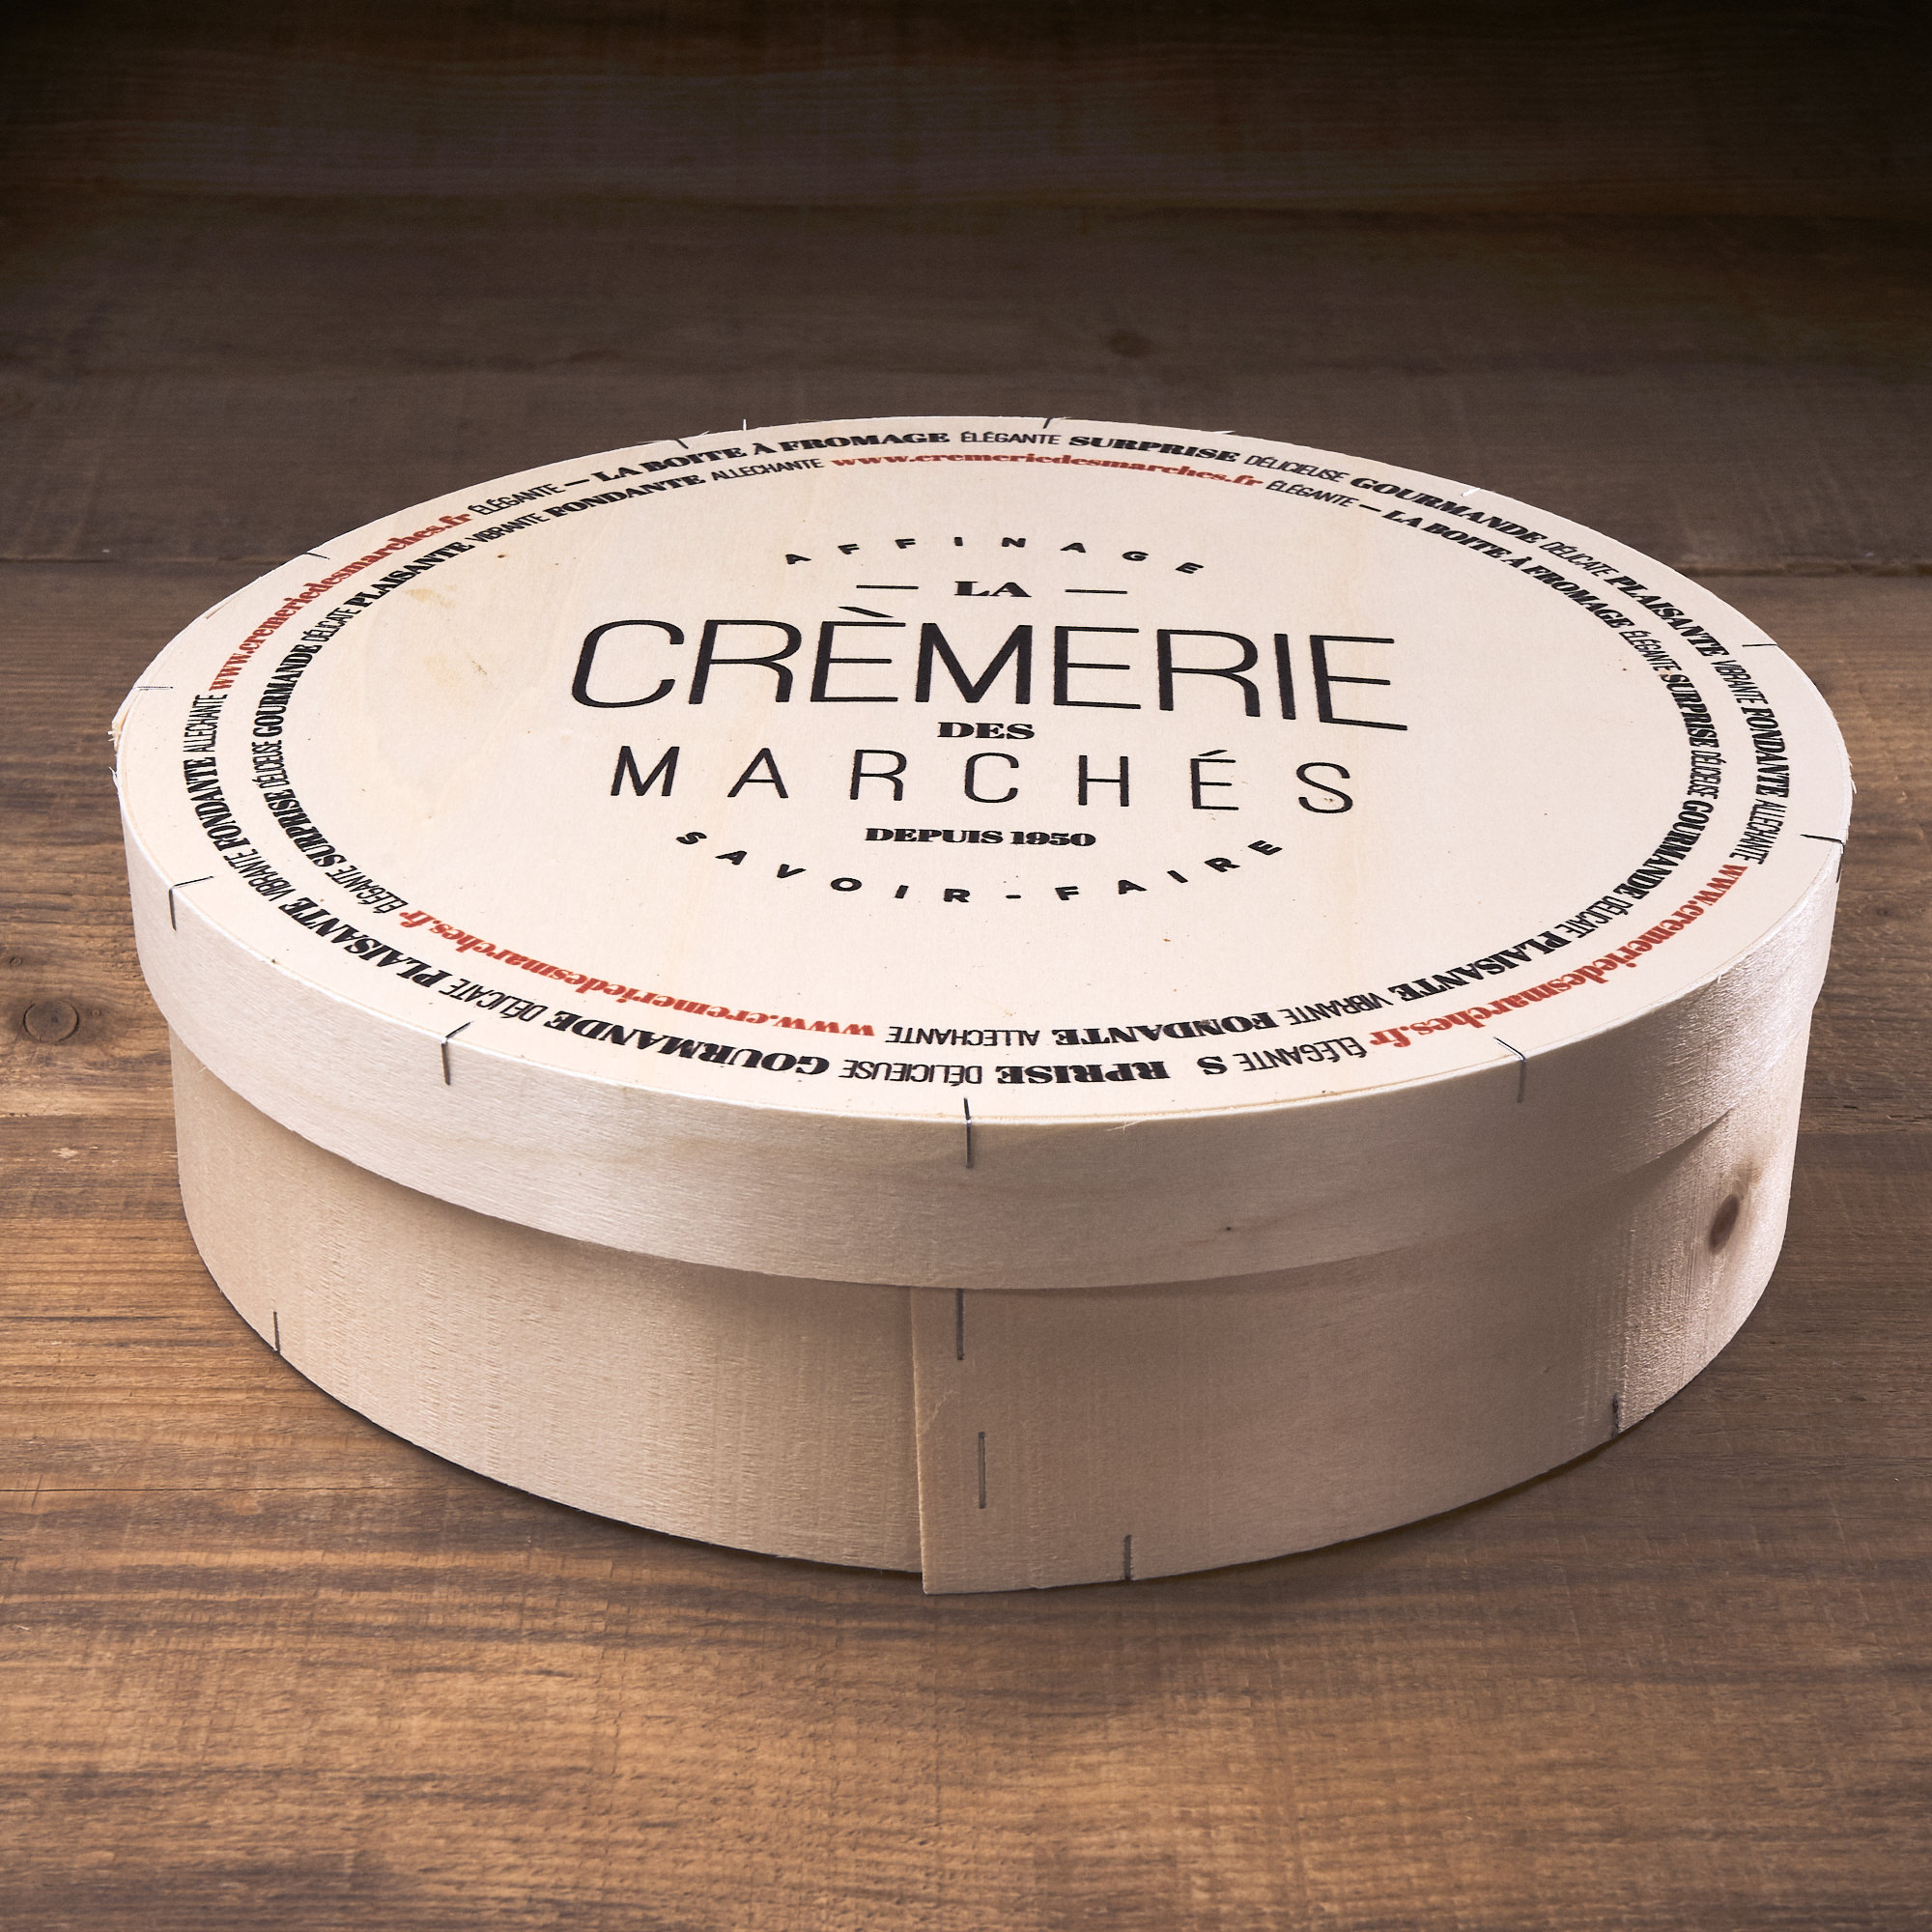 Vente fromages La grande boîte vide - Annecy Haute Savoie